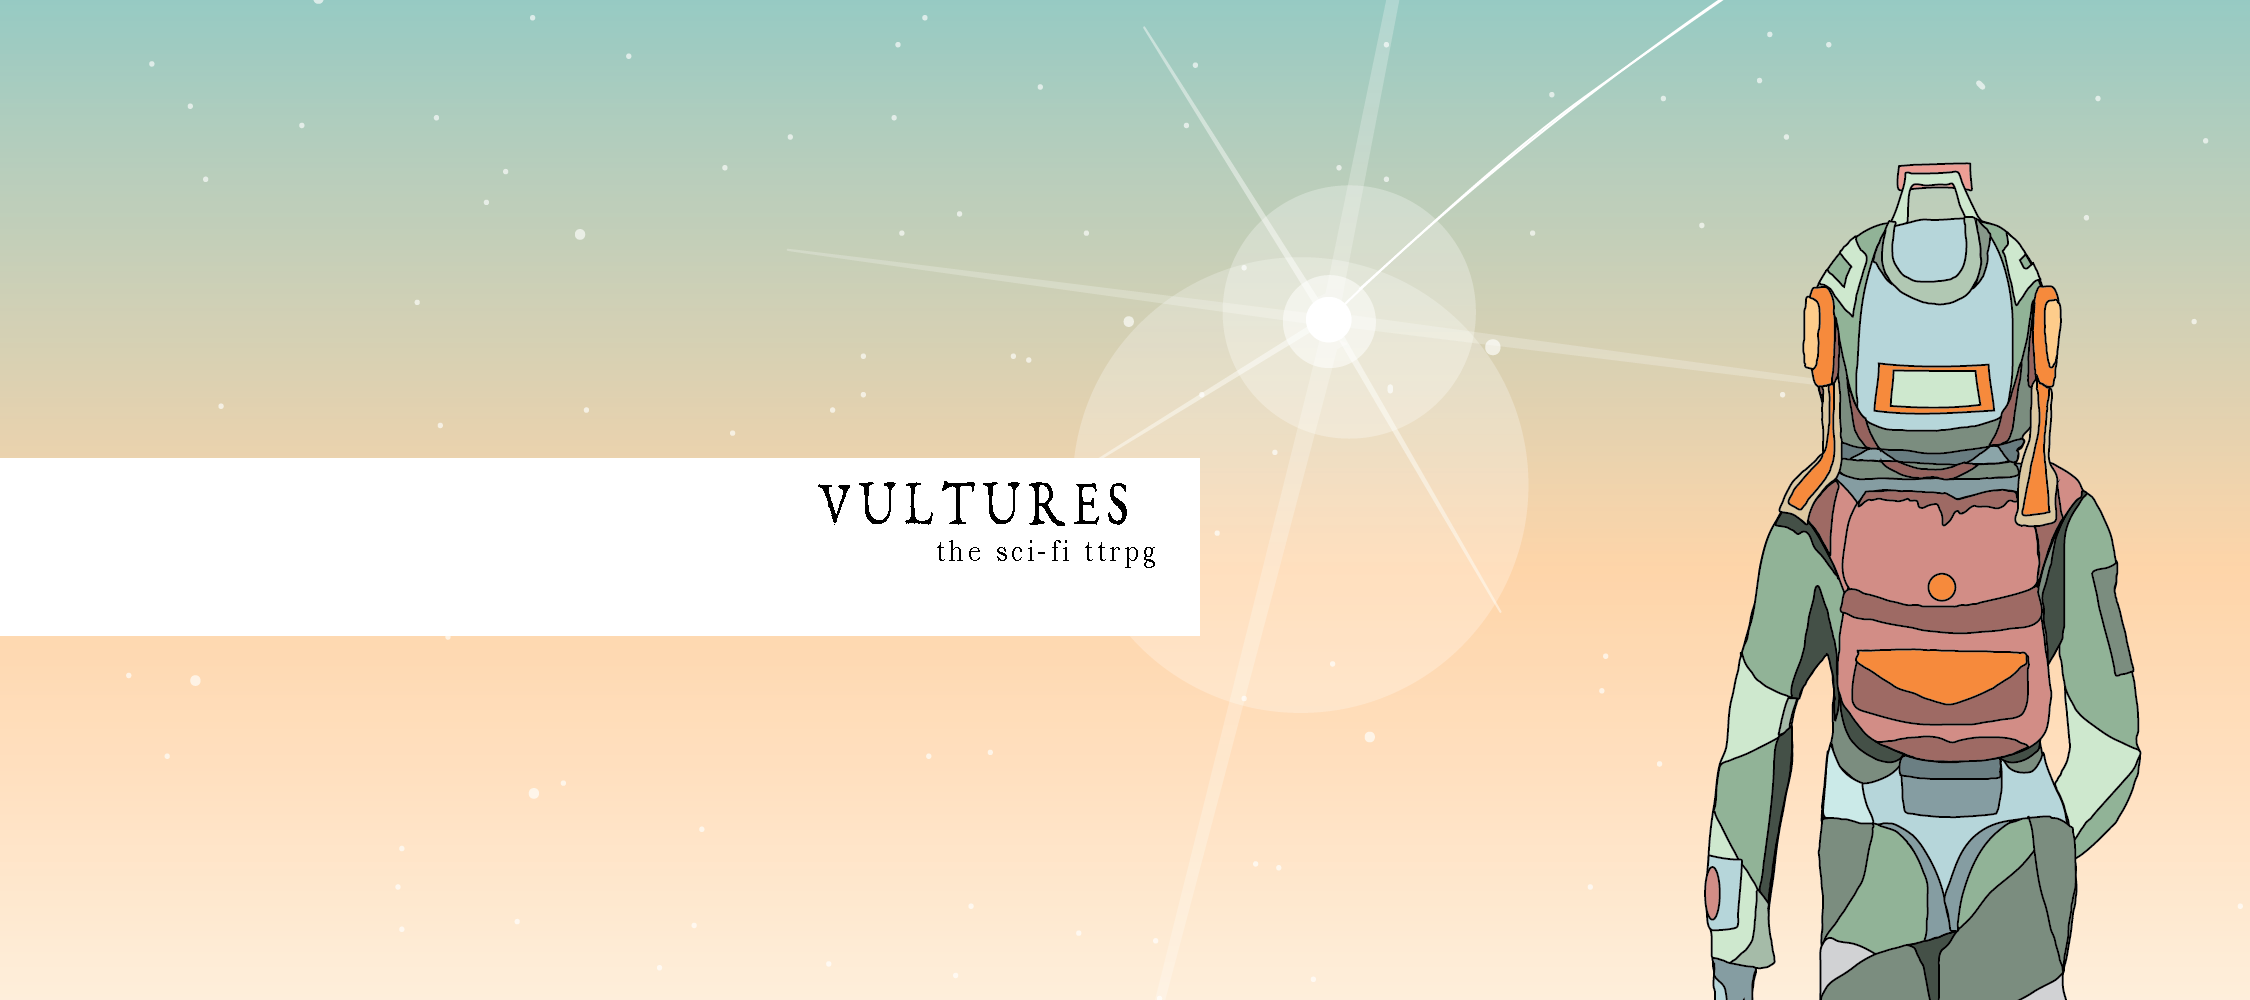 VULTURES